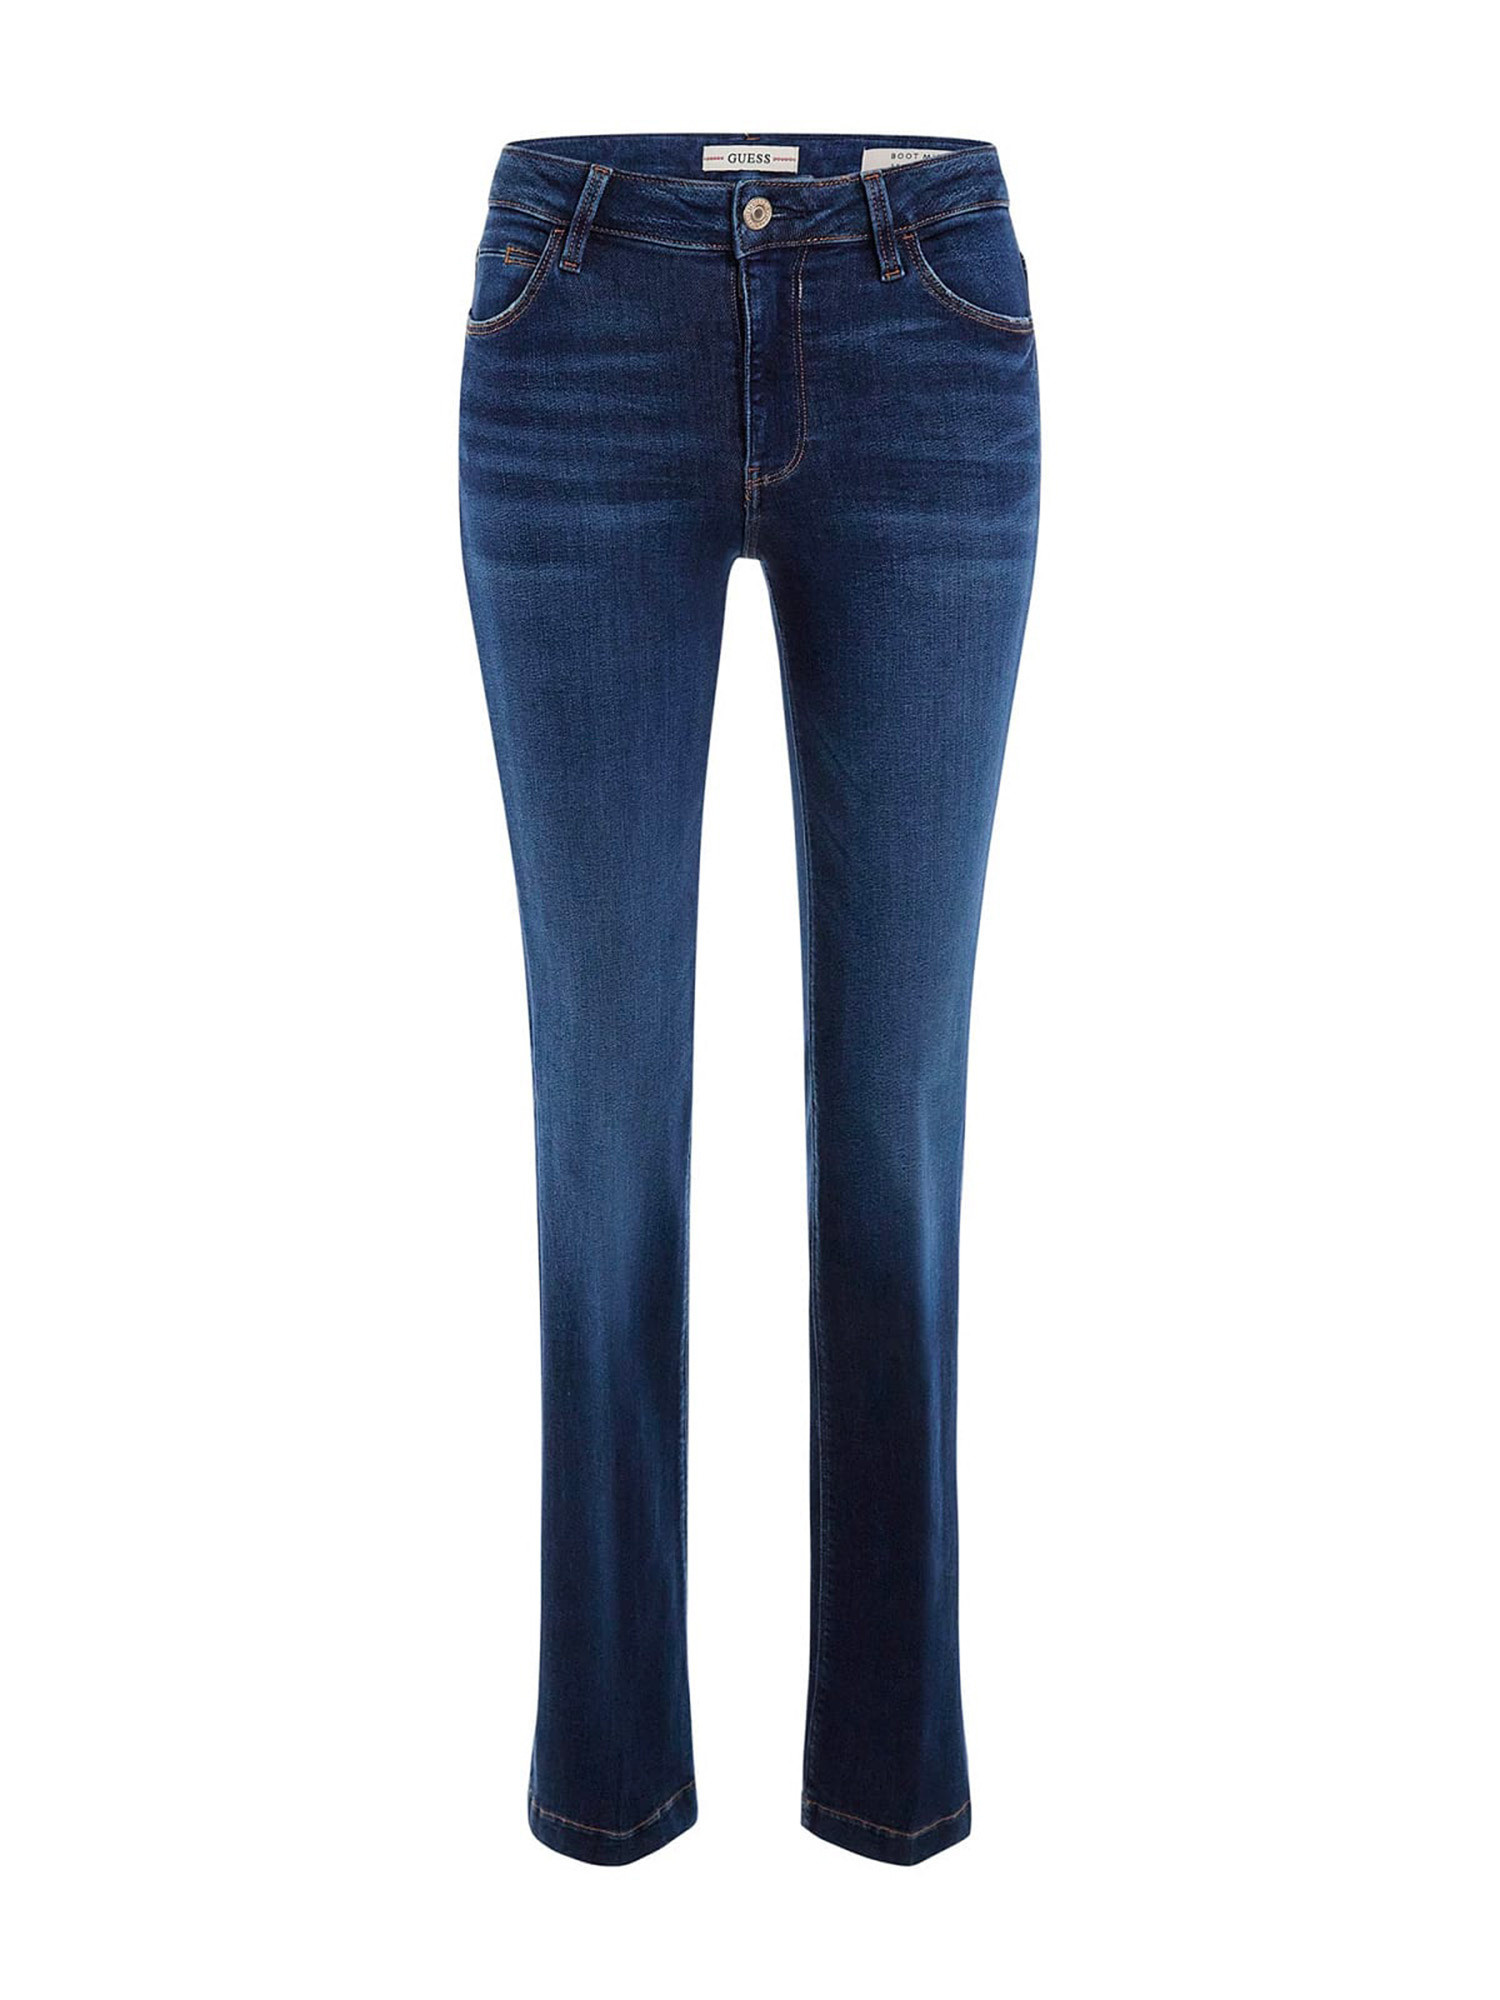 Guess - 5-pocket bootcut jeans, Dark Blue, large image number 0